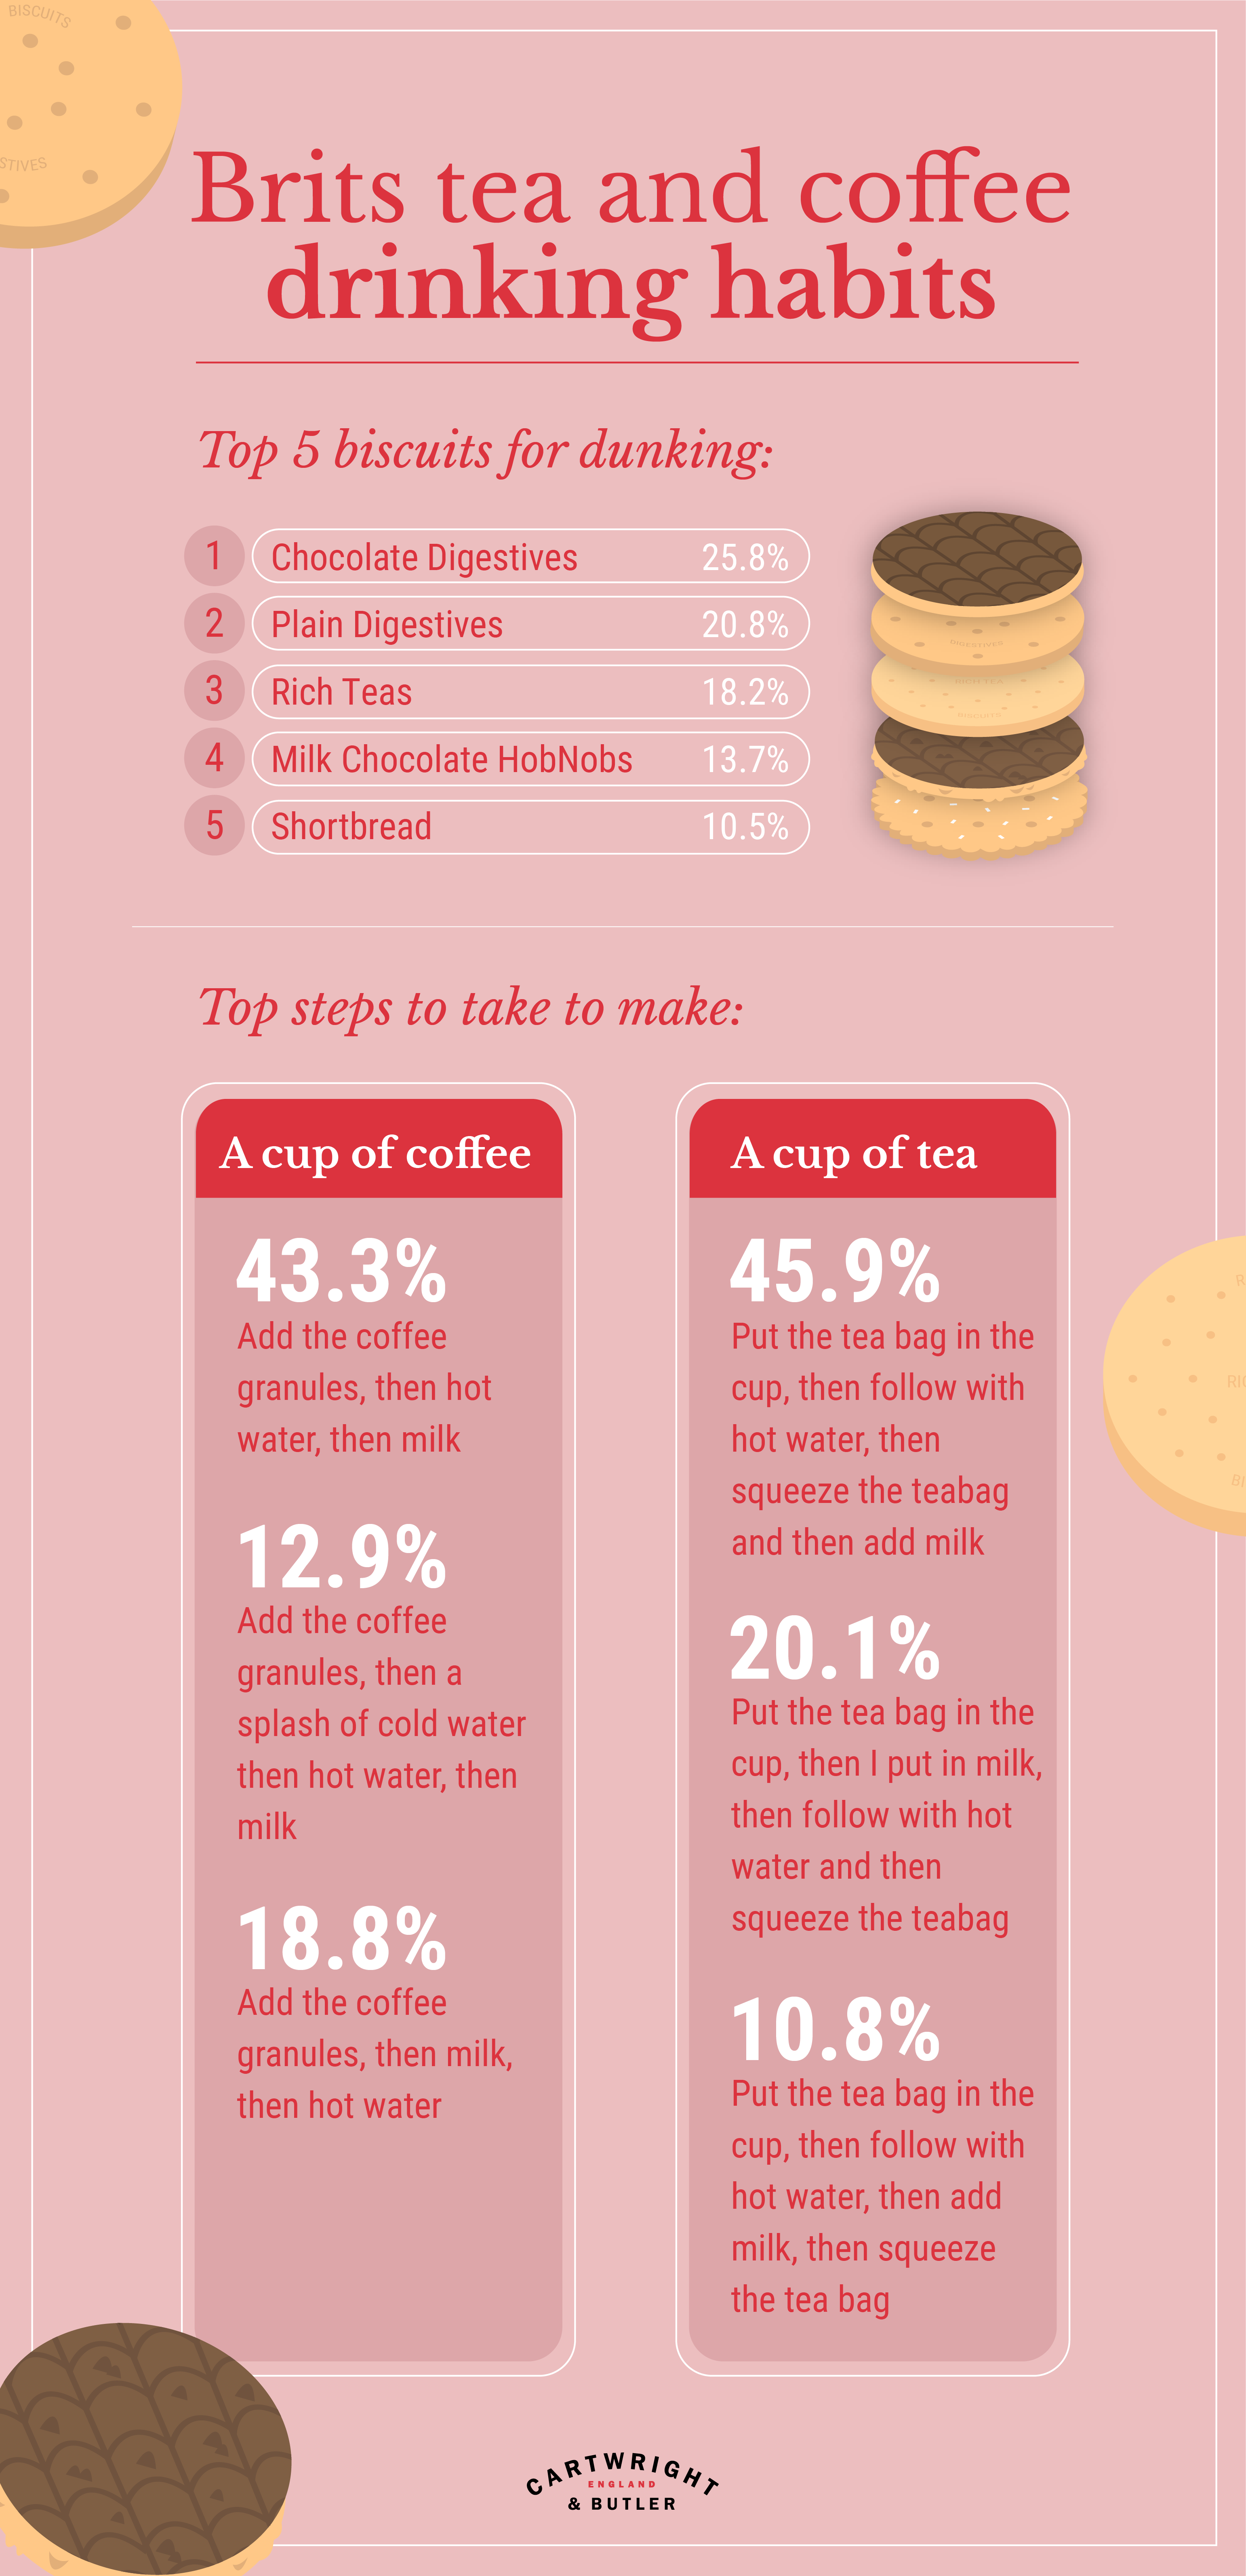 Tea and coffee habits infographic 